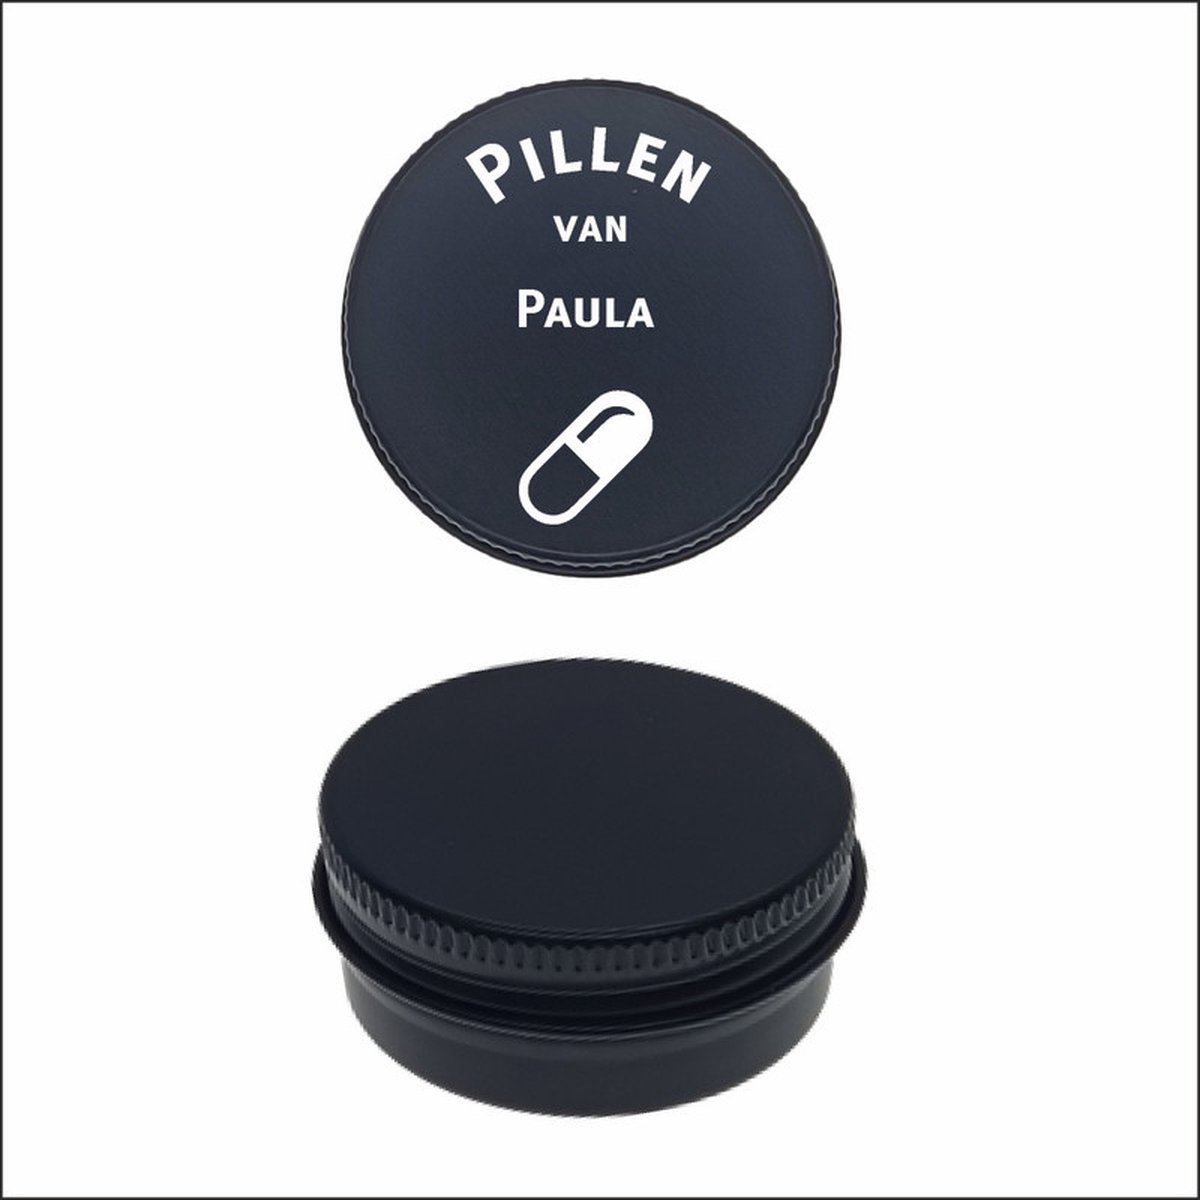 Pillen Blikje Met Naam Gravering - Paula